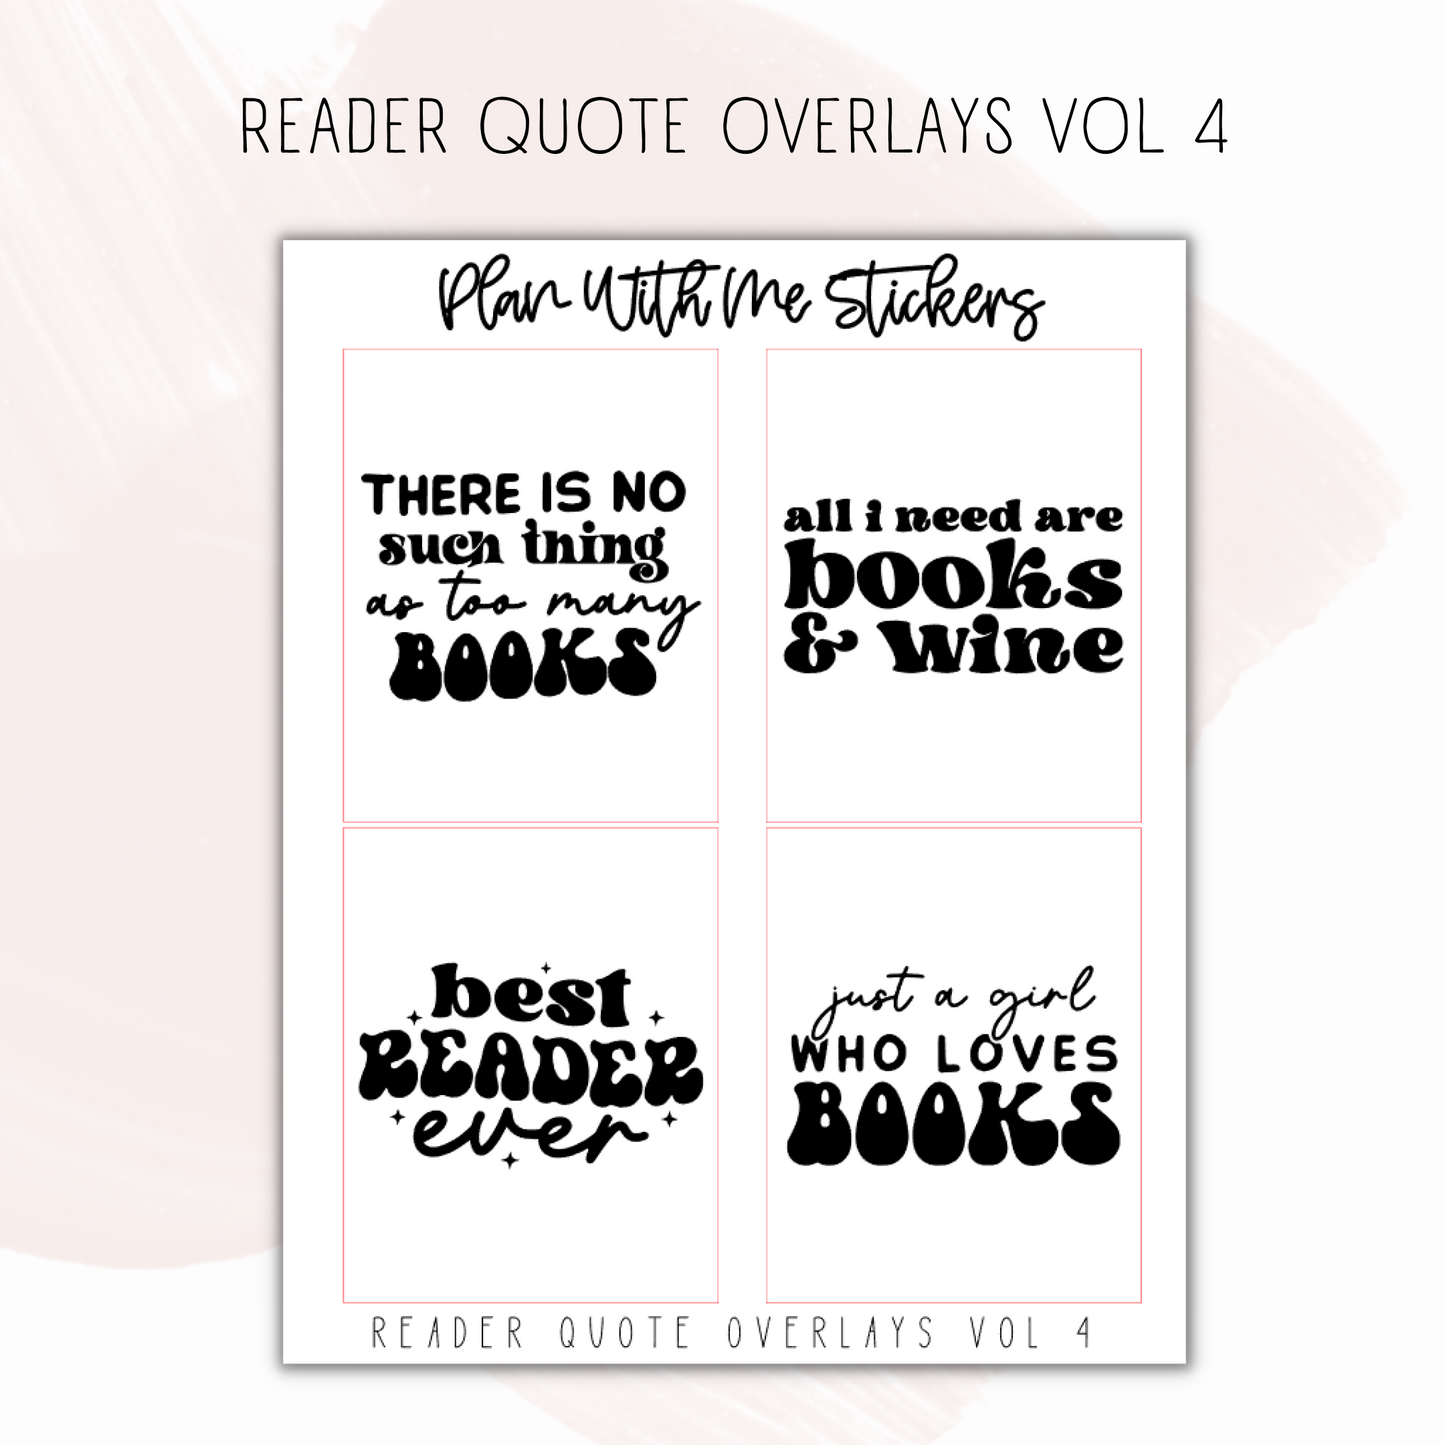 Reader Quote Overlays Vol 4